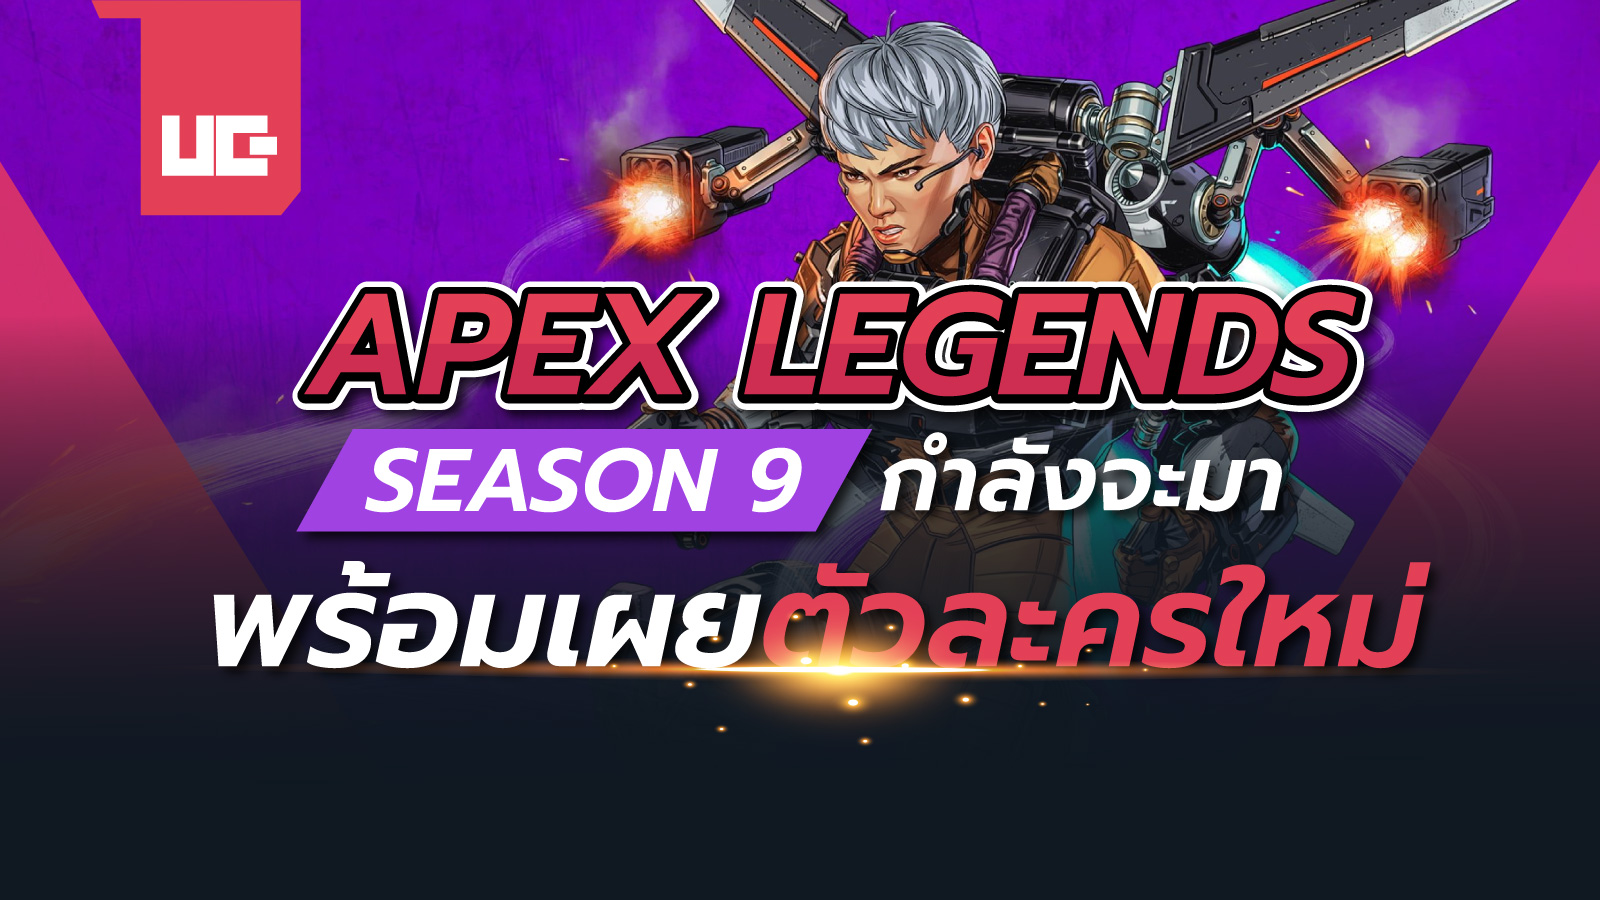 Apex Legends SS9 กำลังจะมาพร้อมตัวละครใหม่ และระบบสร้างห้อง